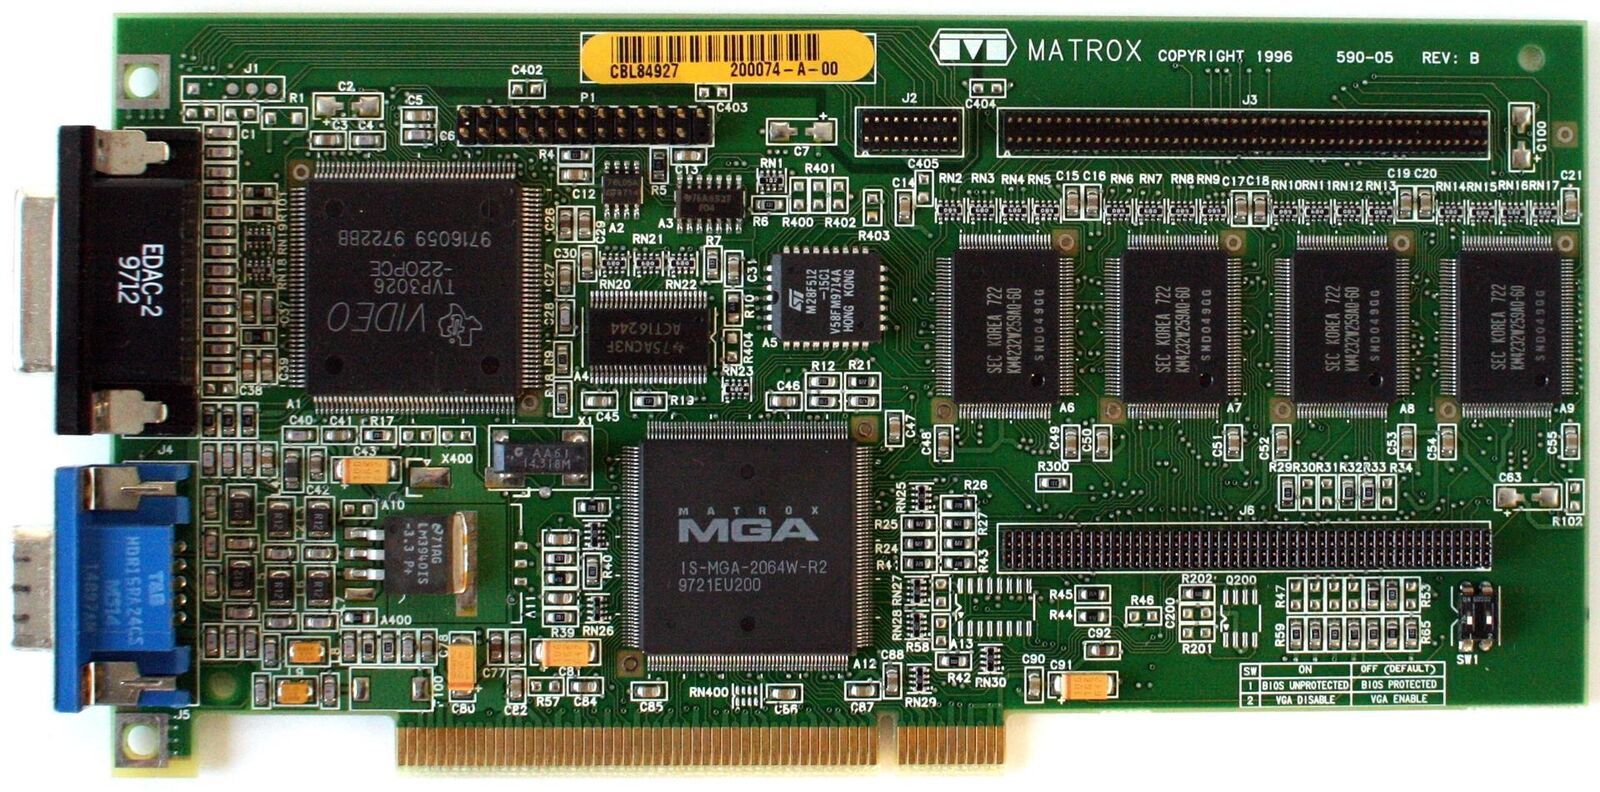 MGA-MIL/4/DELL3 - 4MB PCI VIDEO CARD, 590-05 REV.B, DP/N 00059264 REV.A00 (NO...